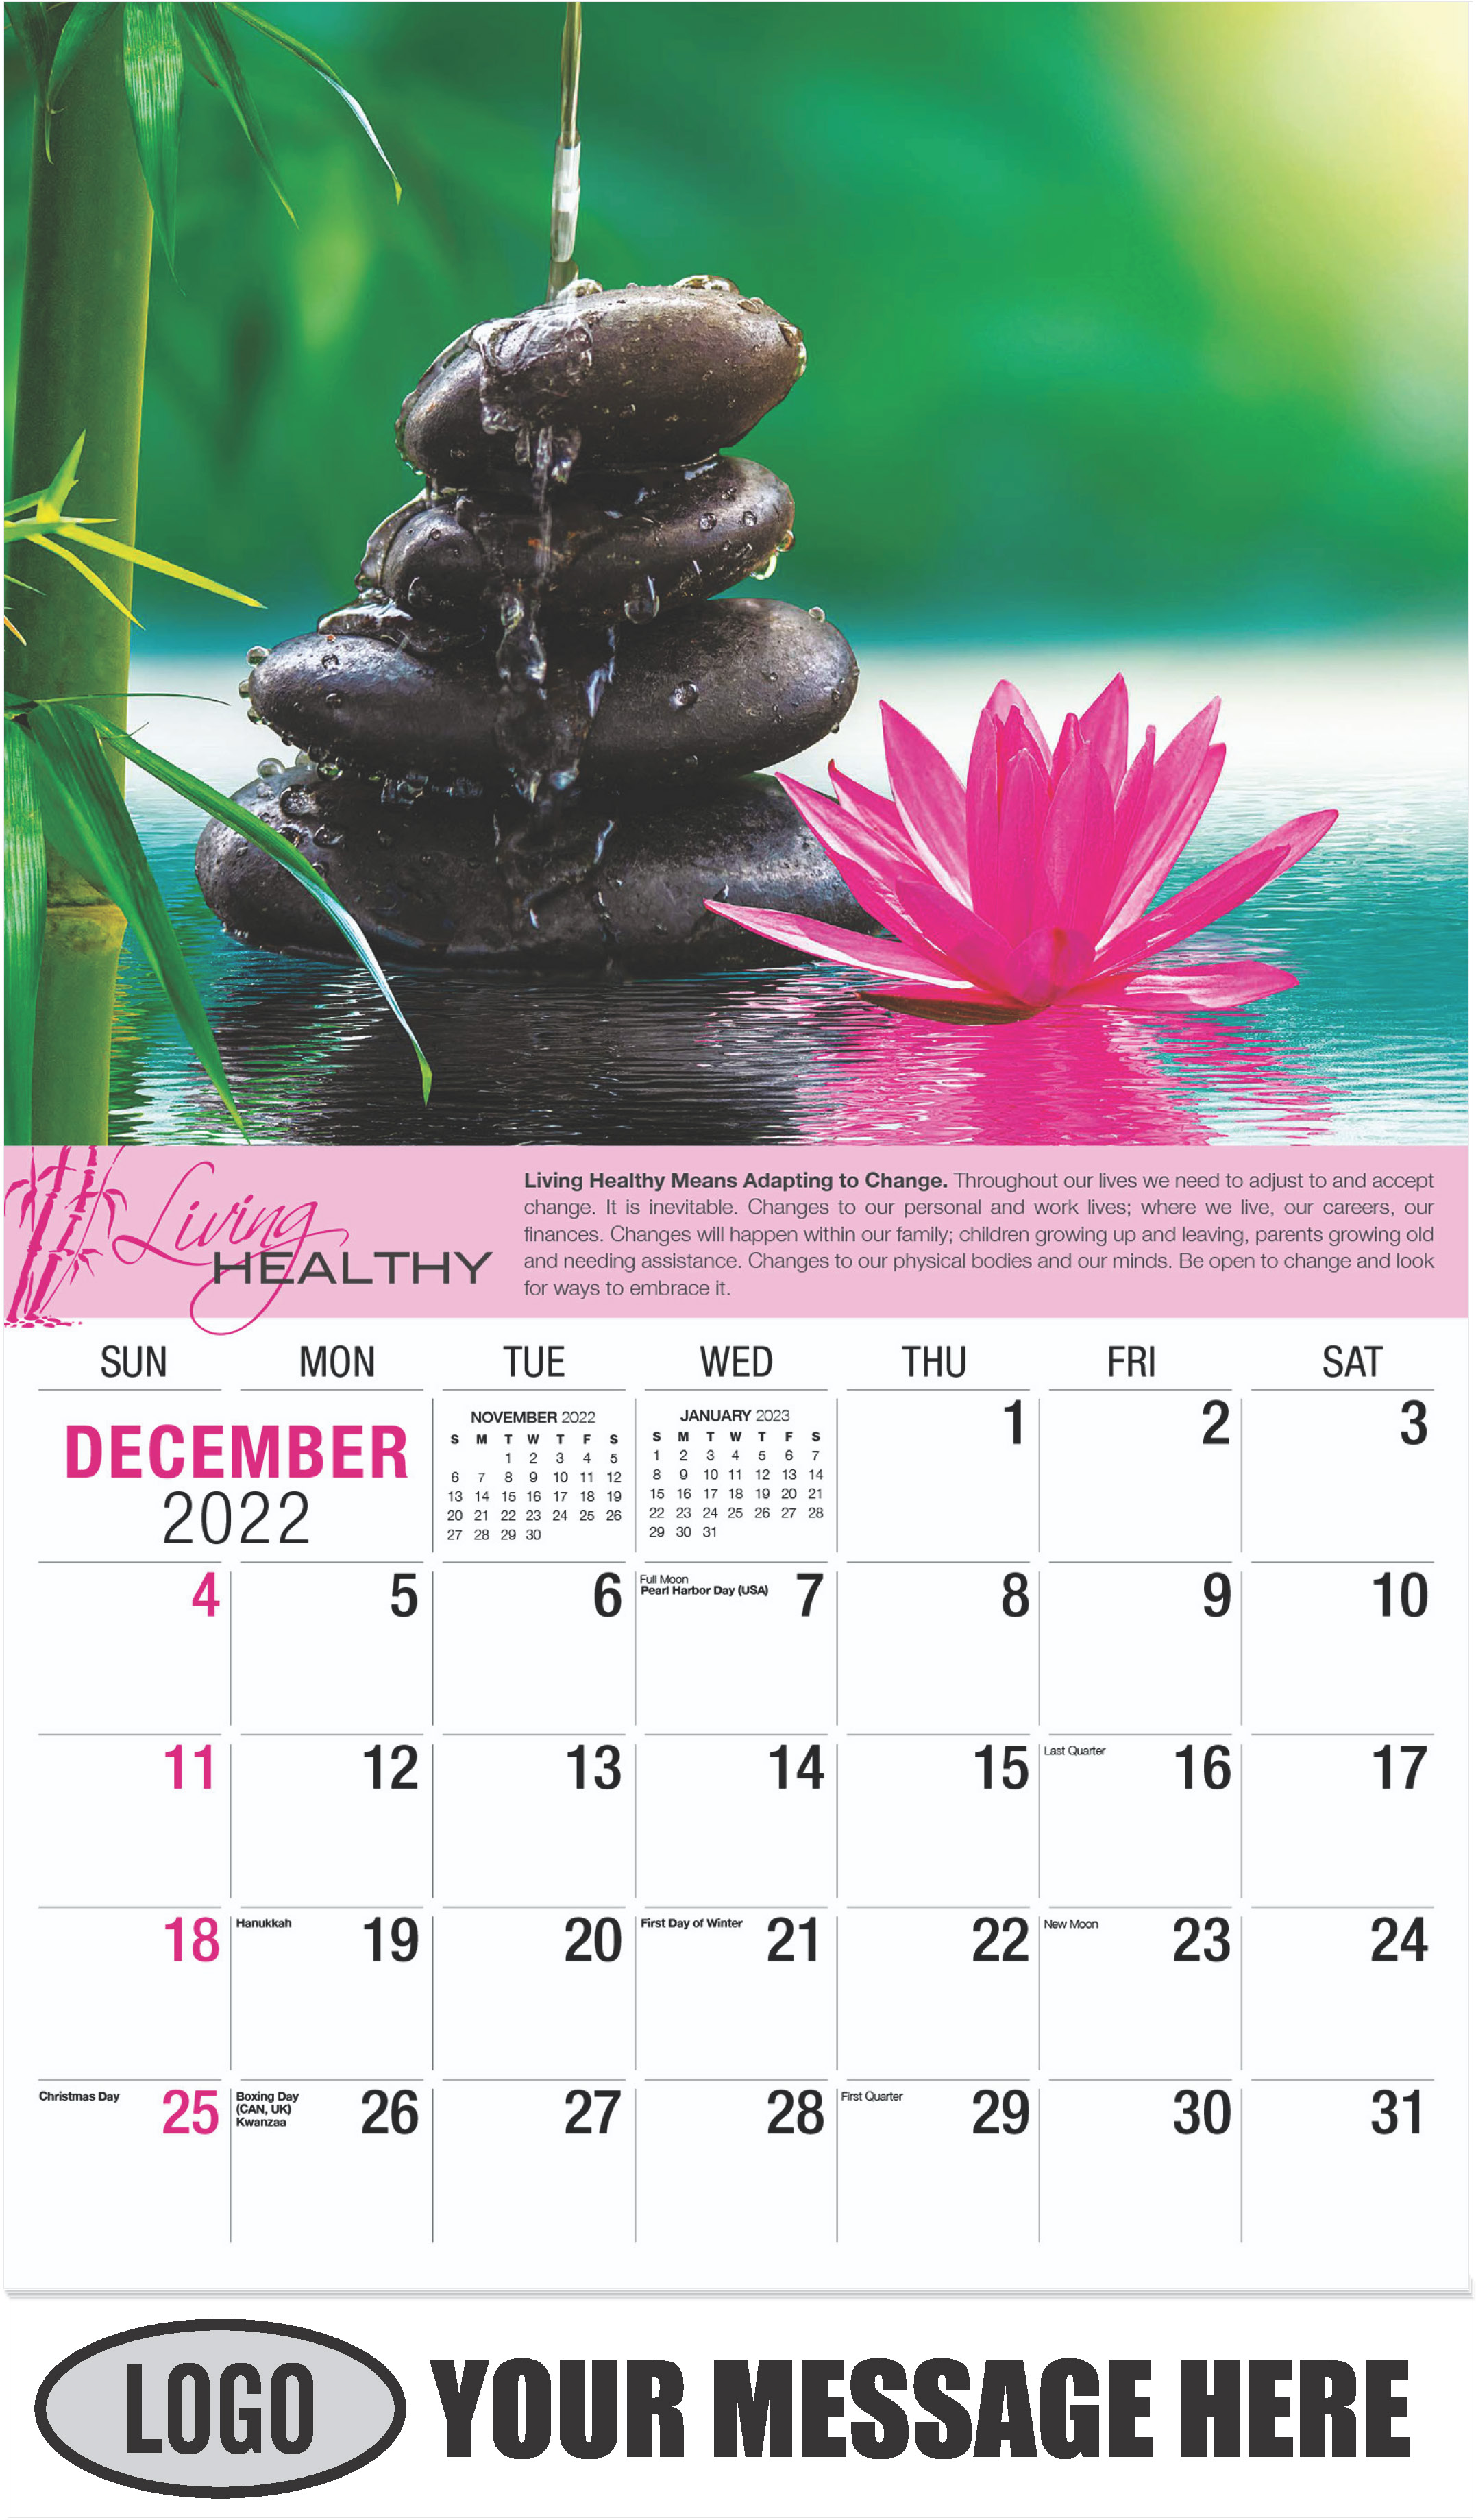 Hot Stones - December 2022 - Living Healthy 2023 Promotional Calendar